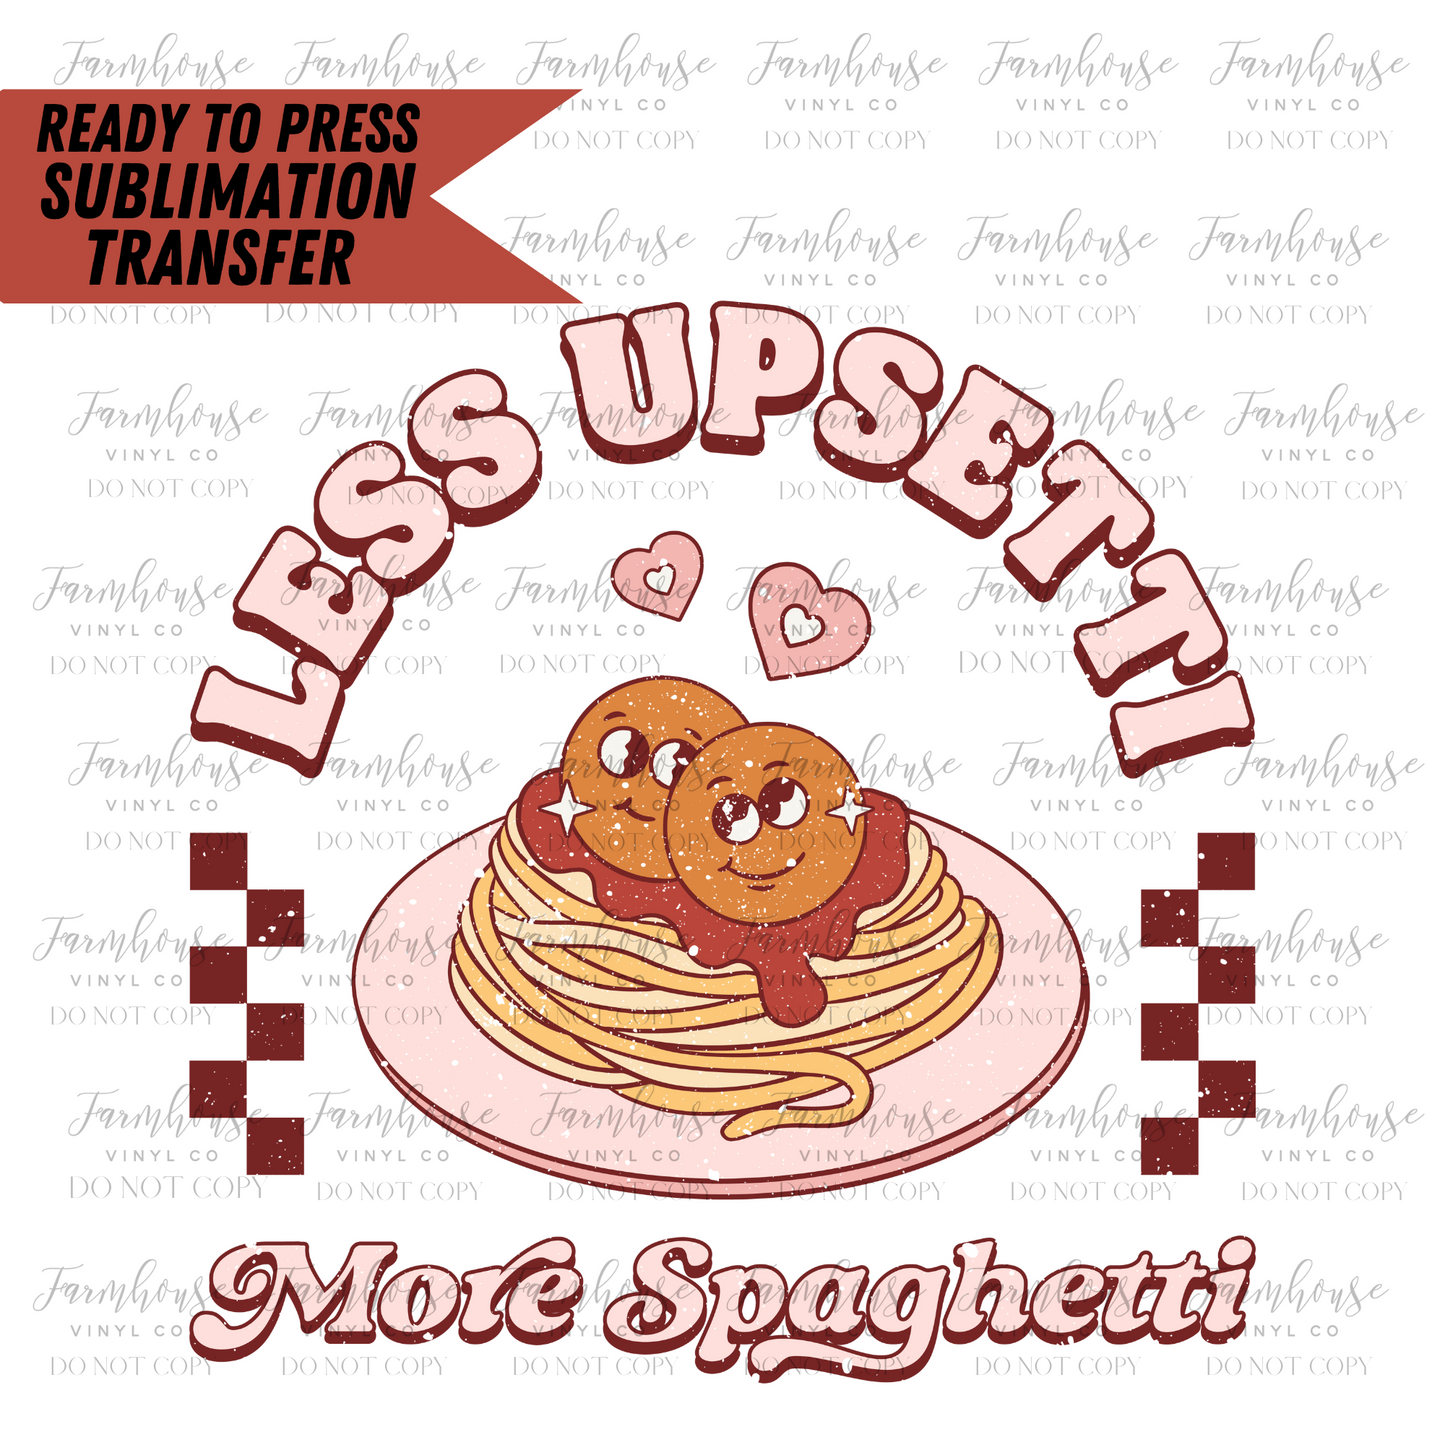 Less Upsetti More Spaghetti Ready To Press Sublimation Transfer